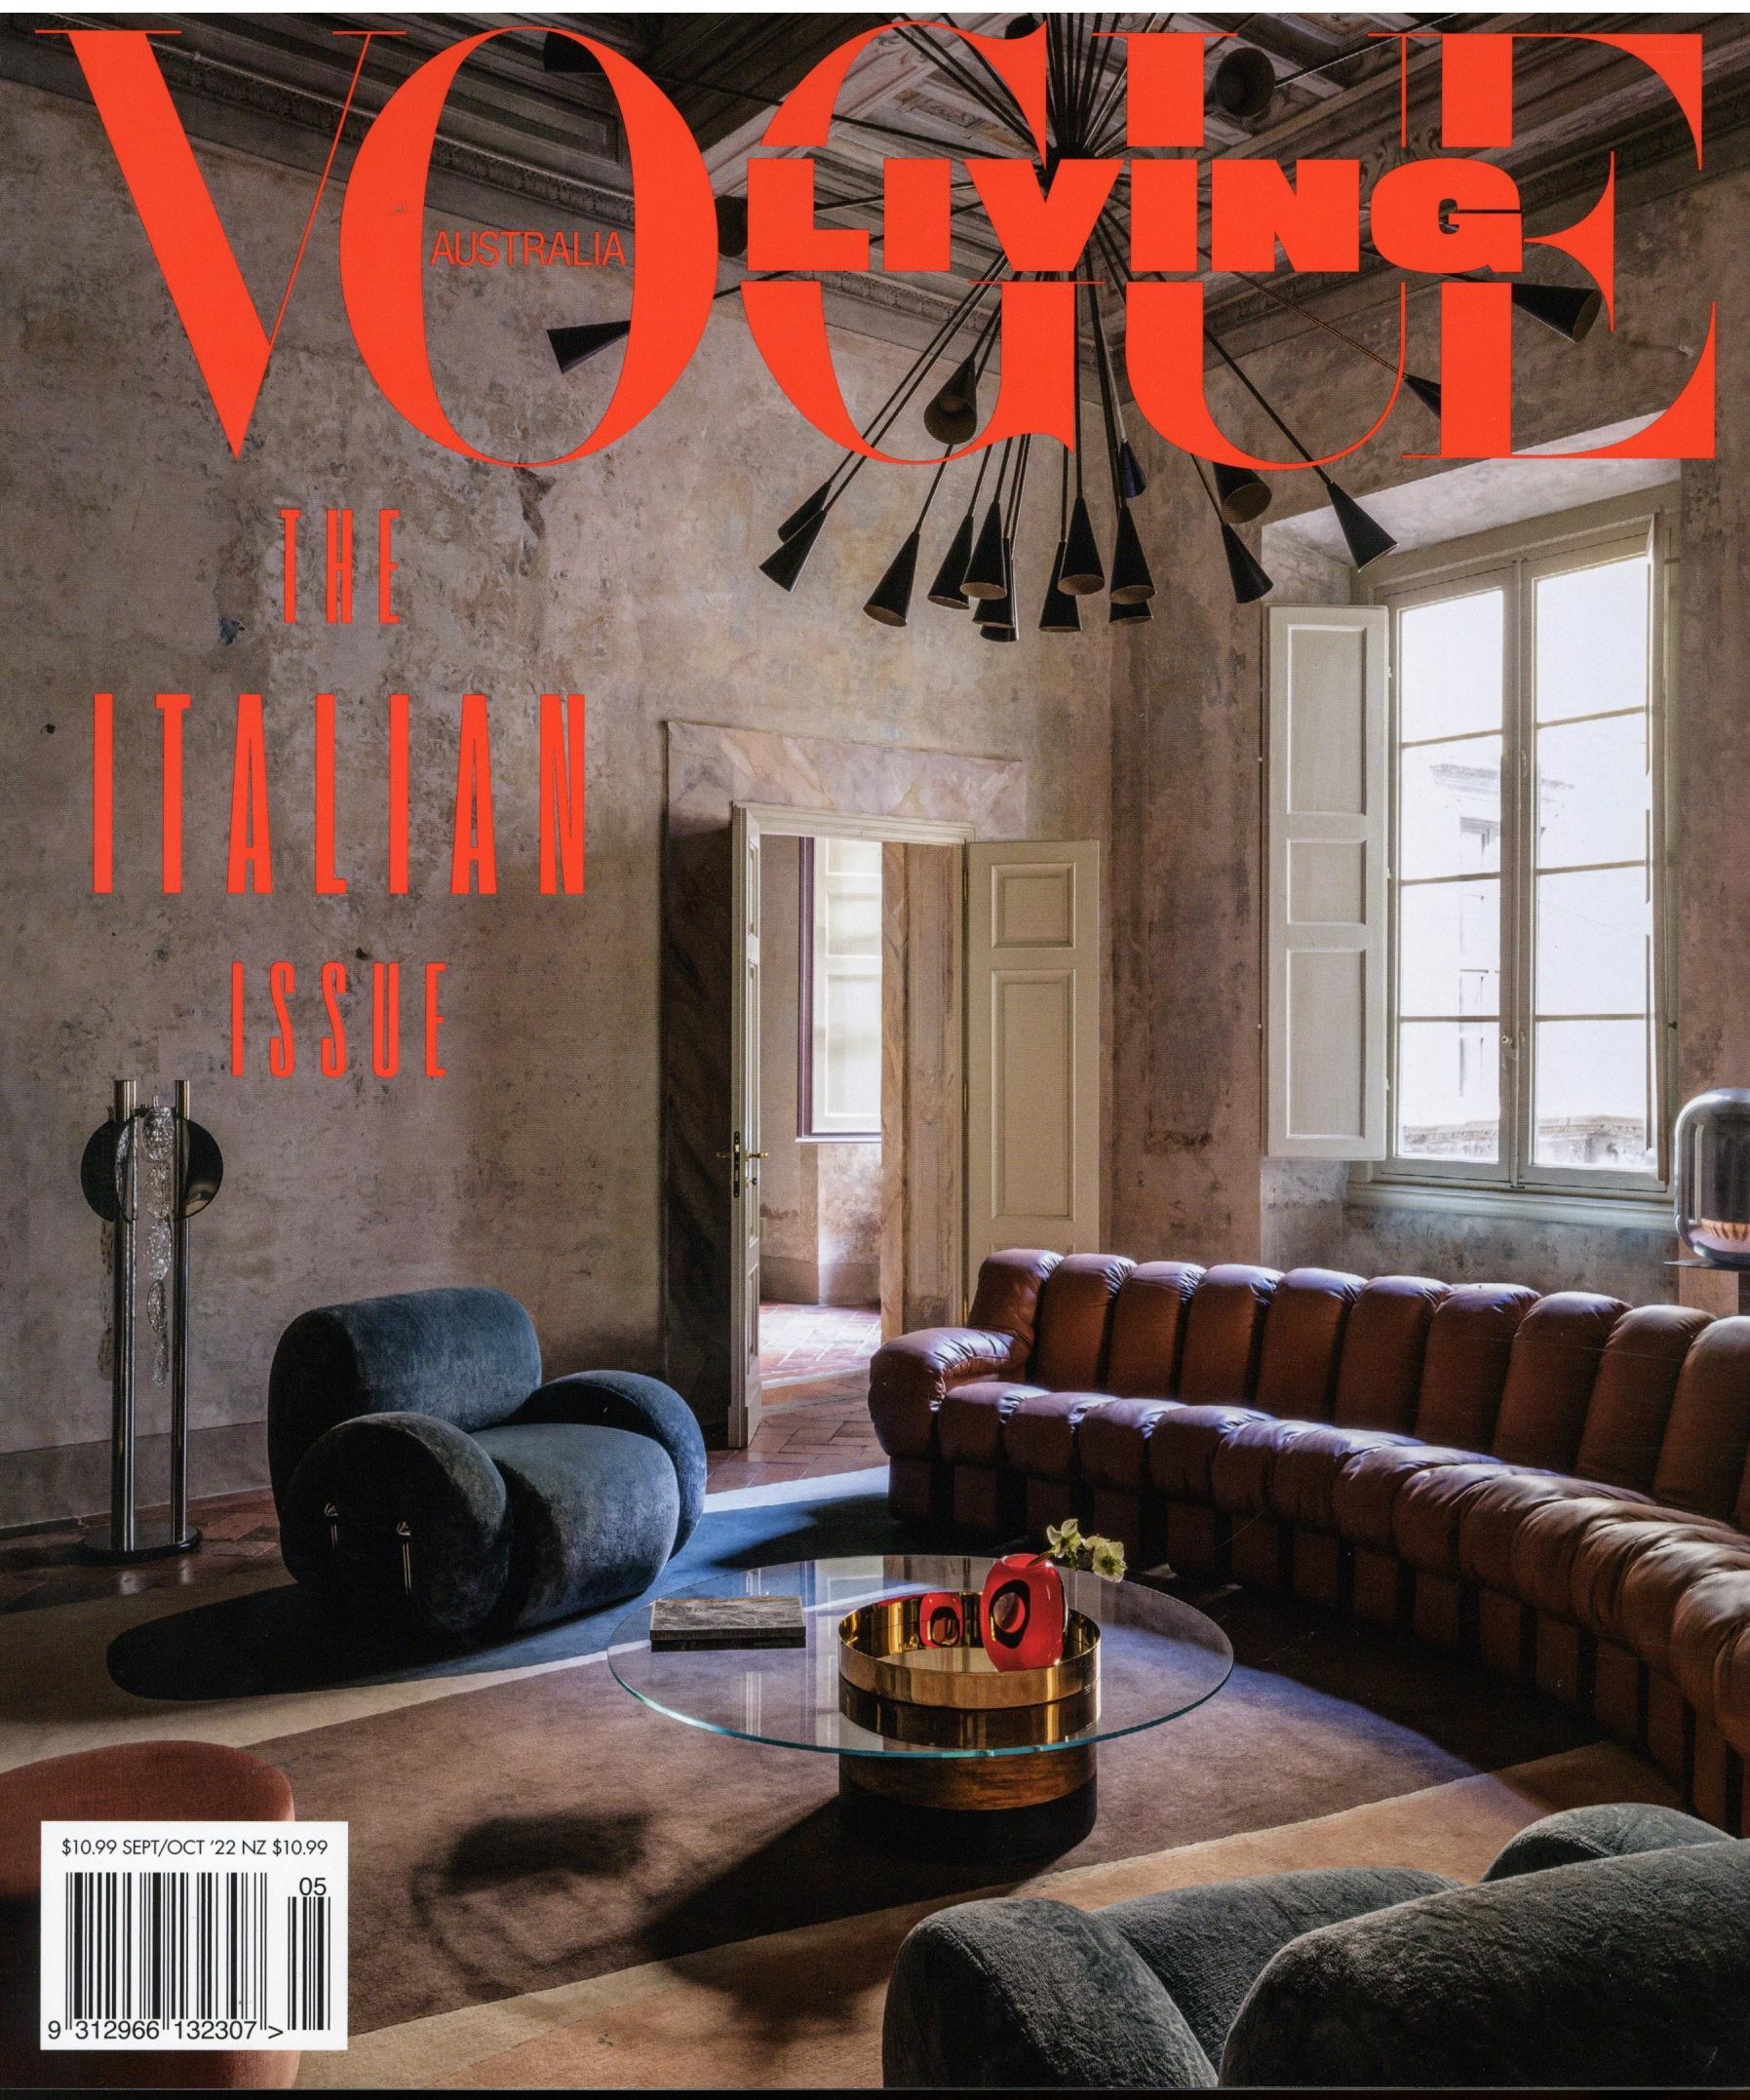 Vogue Living (AUS)